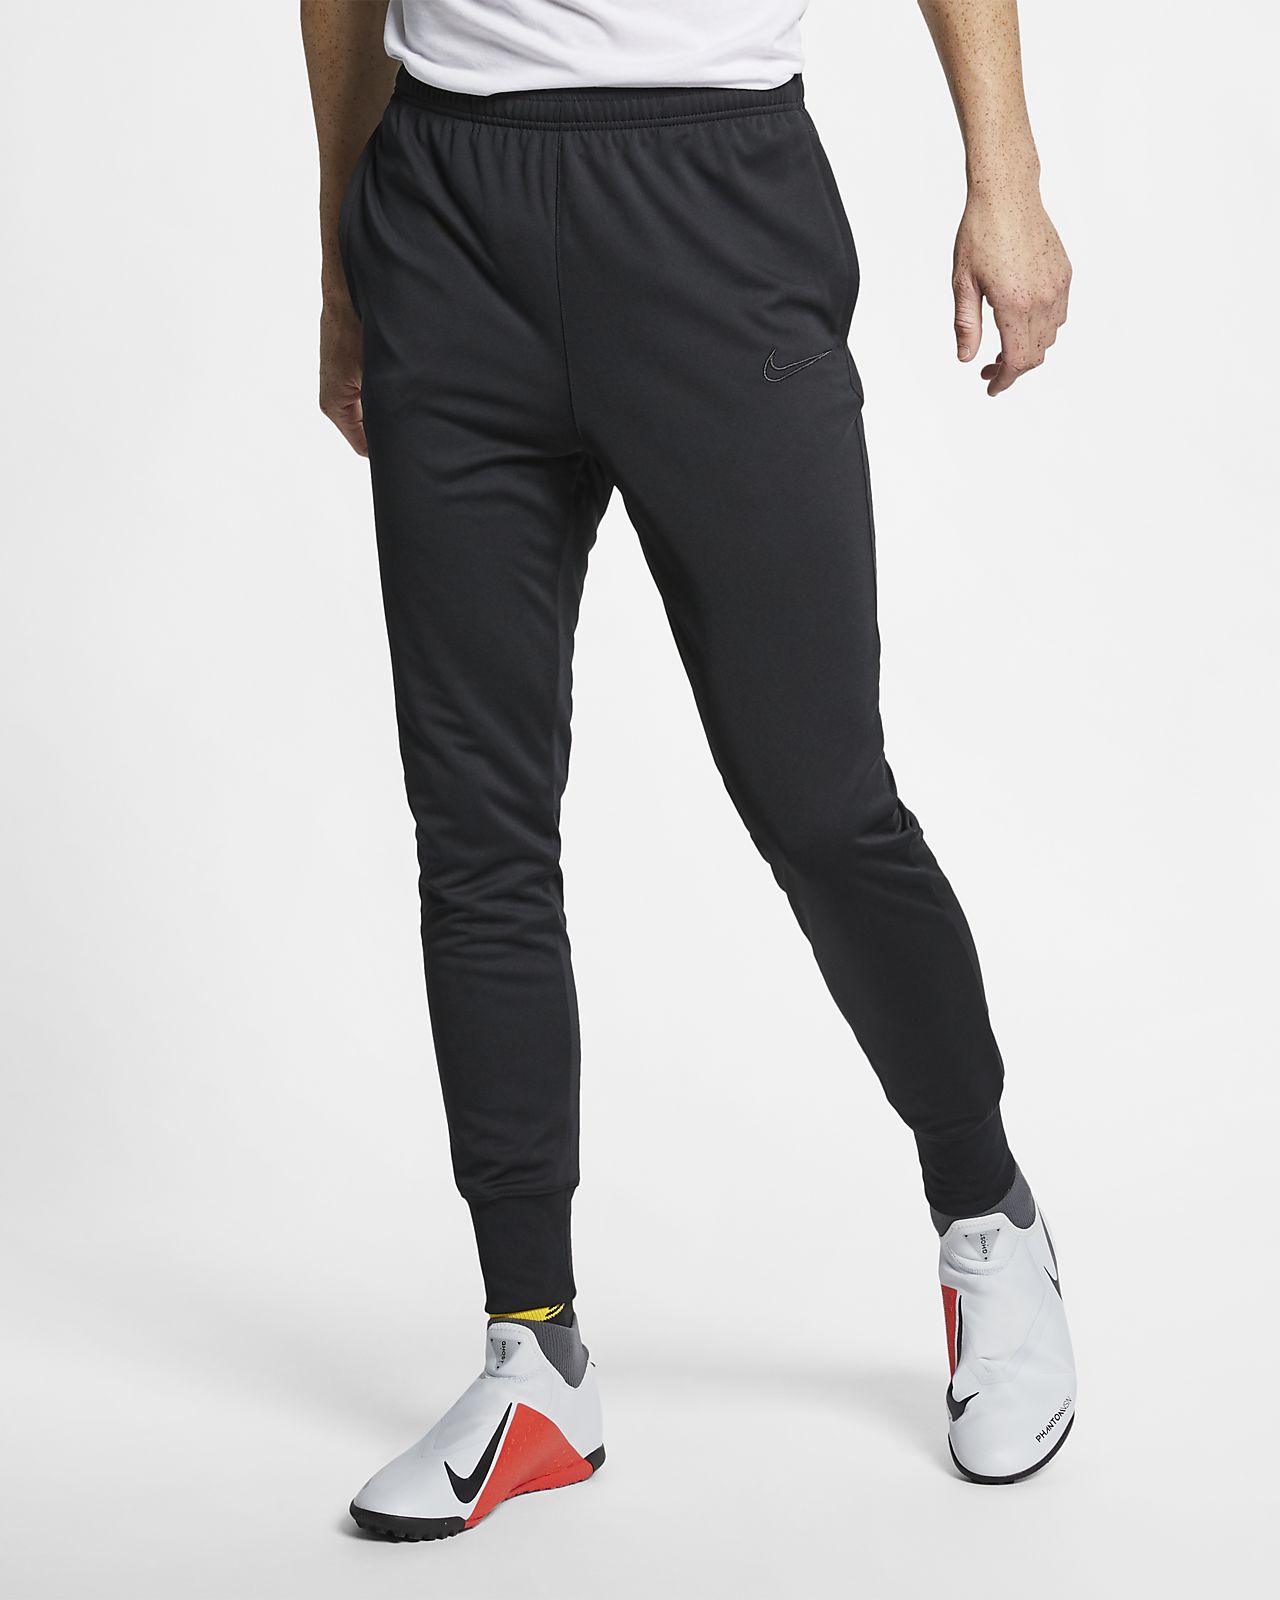 Nike Mens Dri Fit Academy Soccer Pants - FitnessRetro